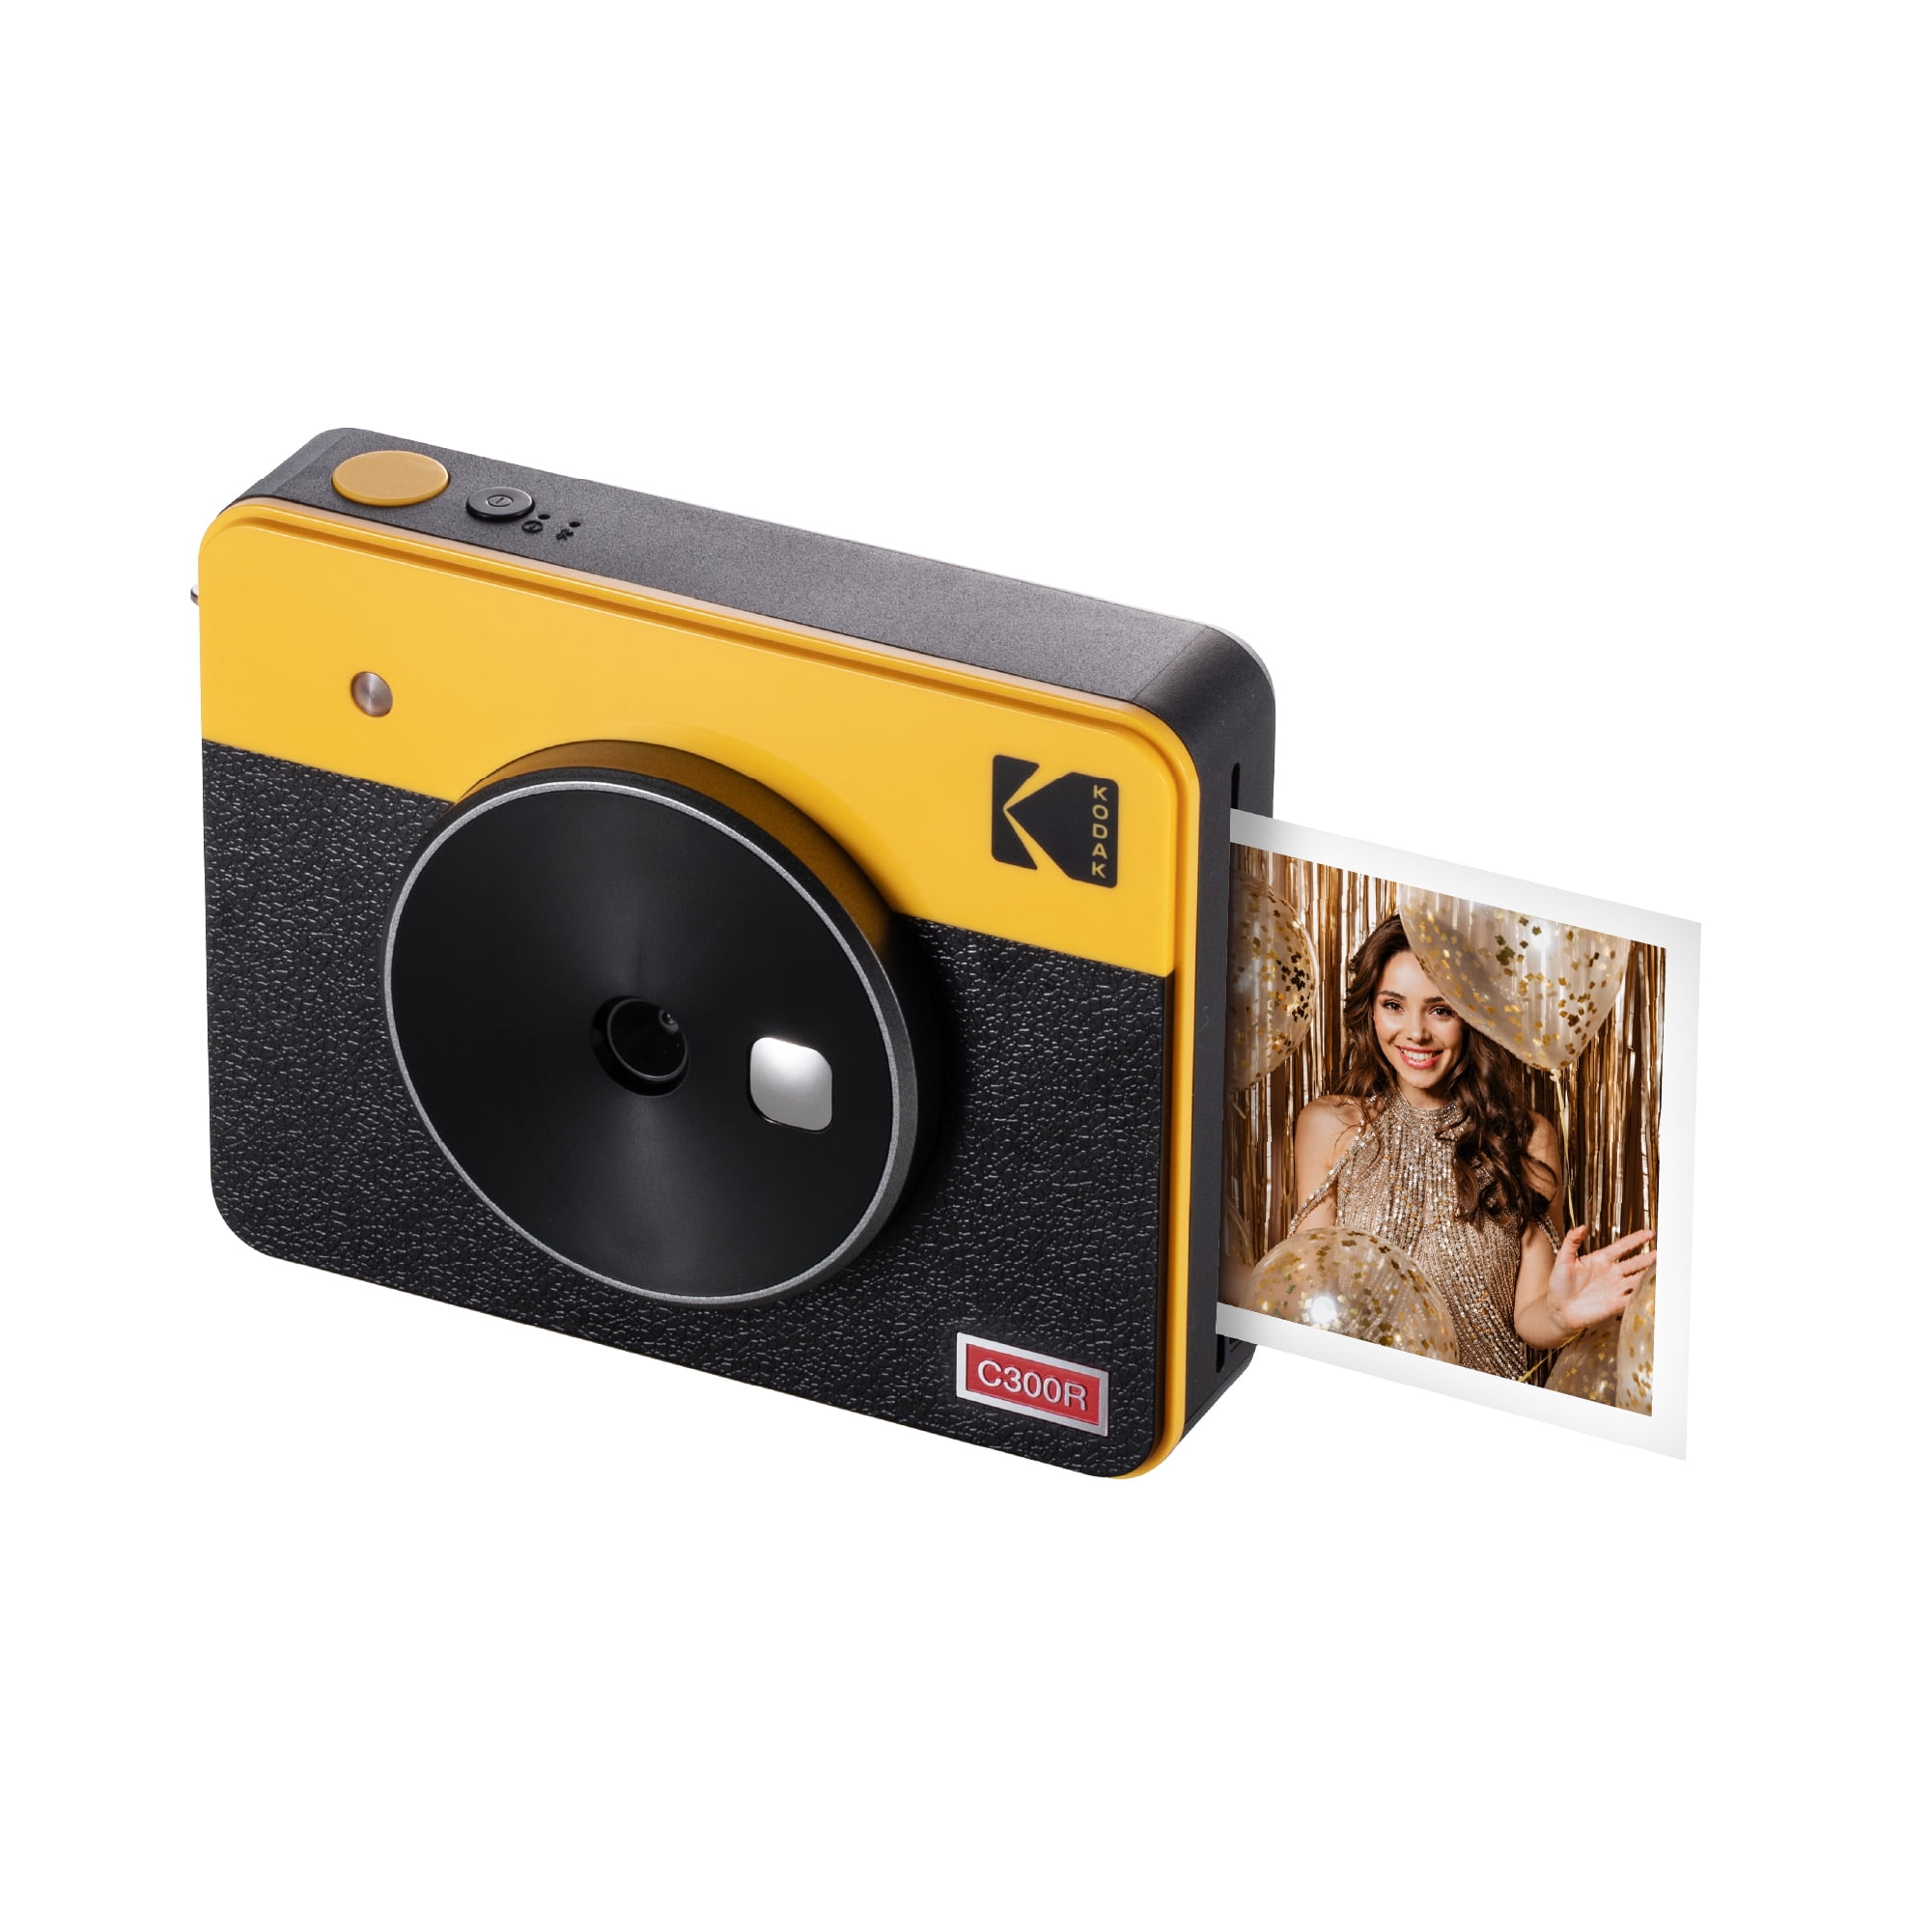 GIFT SET] Kodak Mini Shot 3 Retro. 2-in-1 Portable Wireless Instant Camera  & Photo Printer. Only 189$ per set of one camera + 30 sheets of…